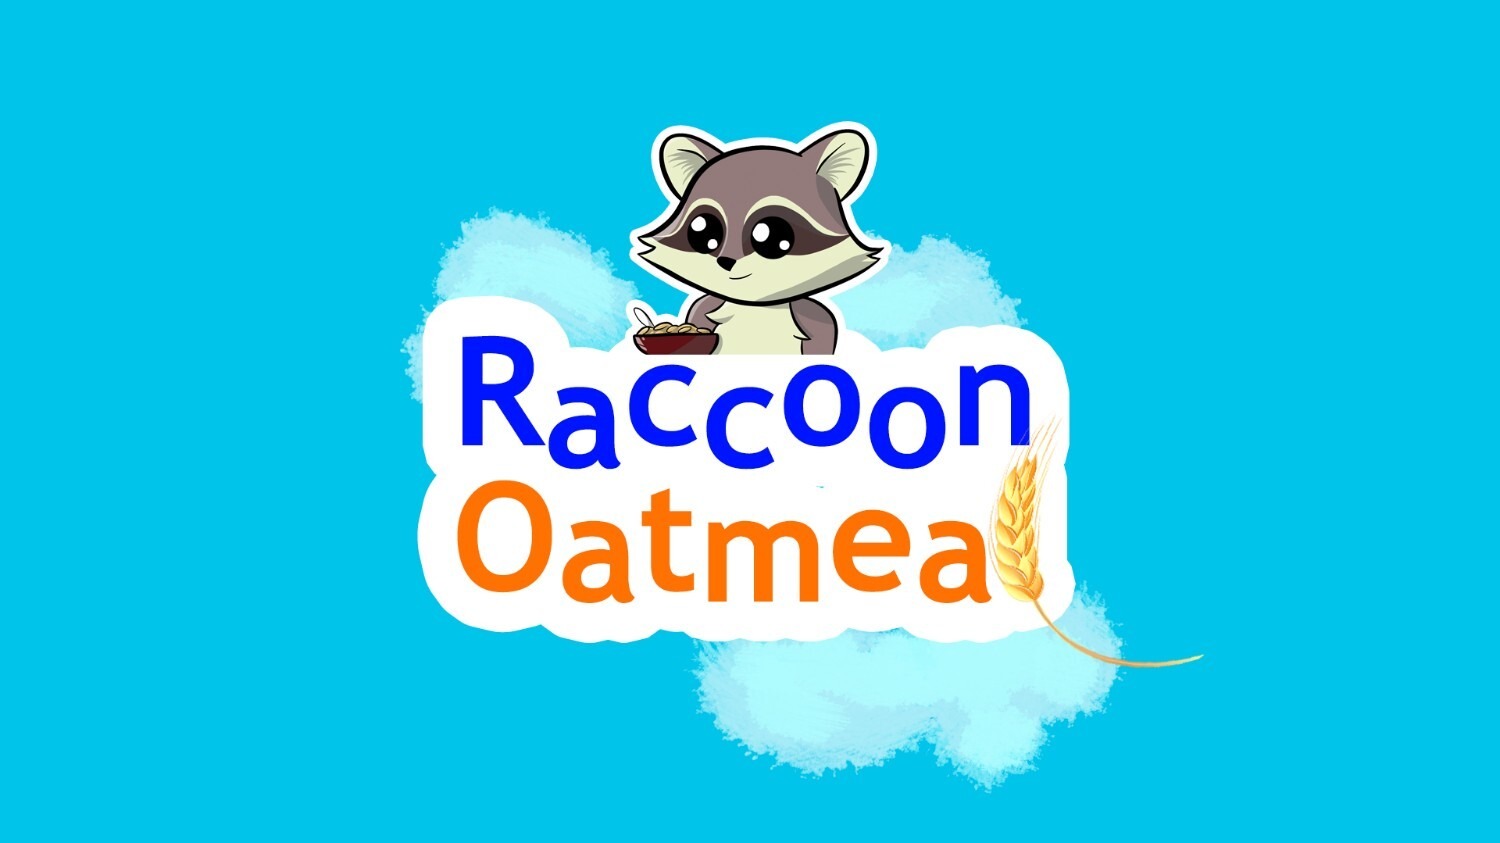 Raccoon Oatmeal logo